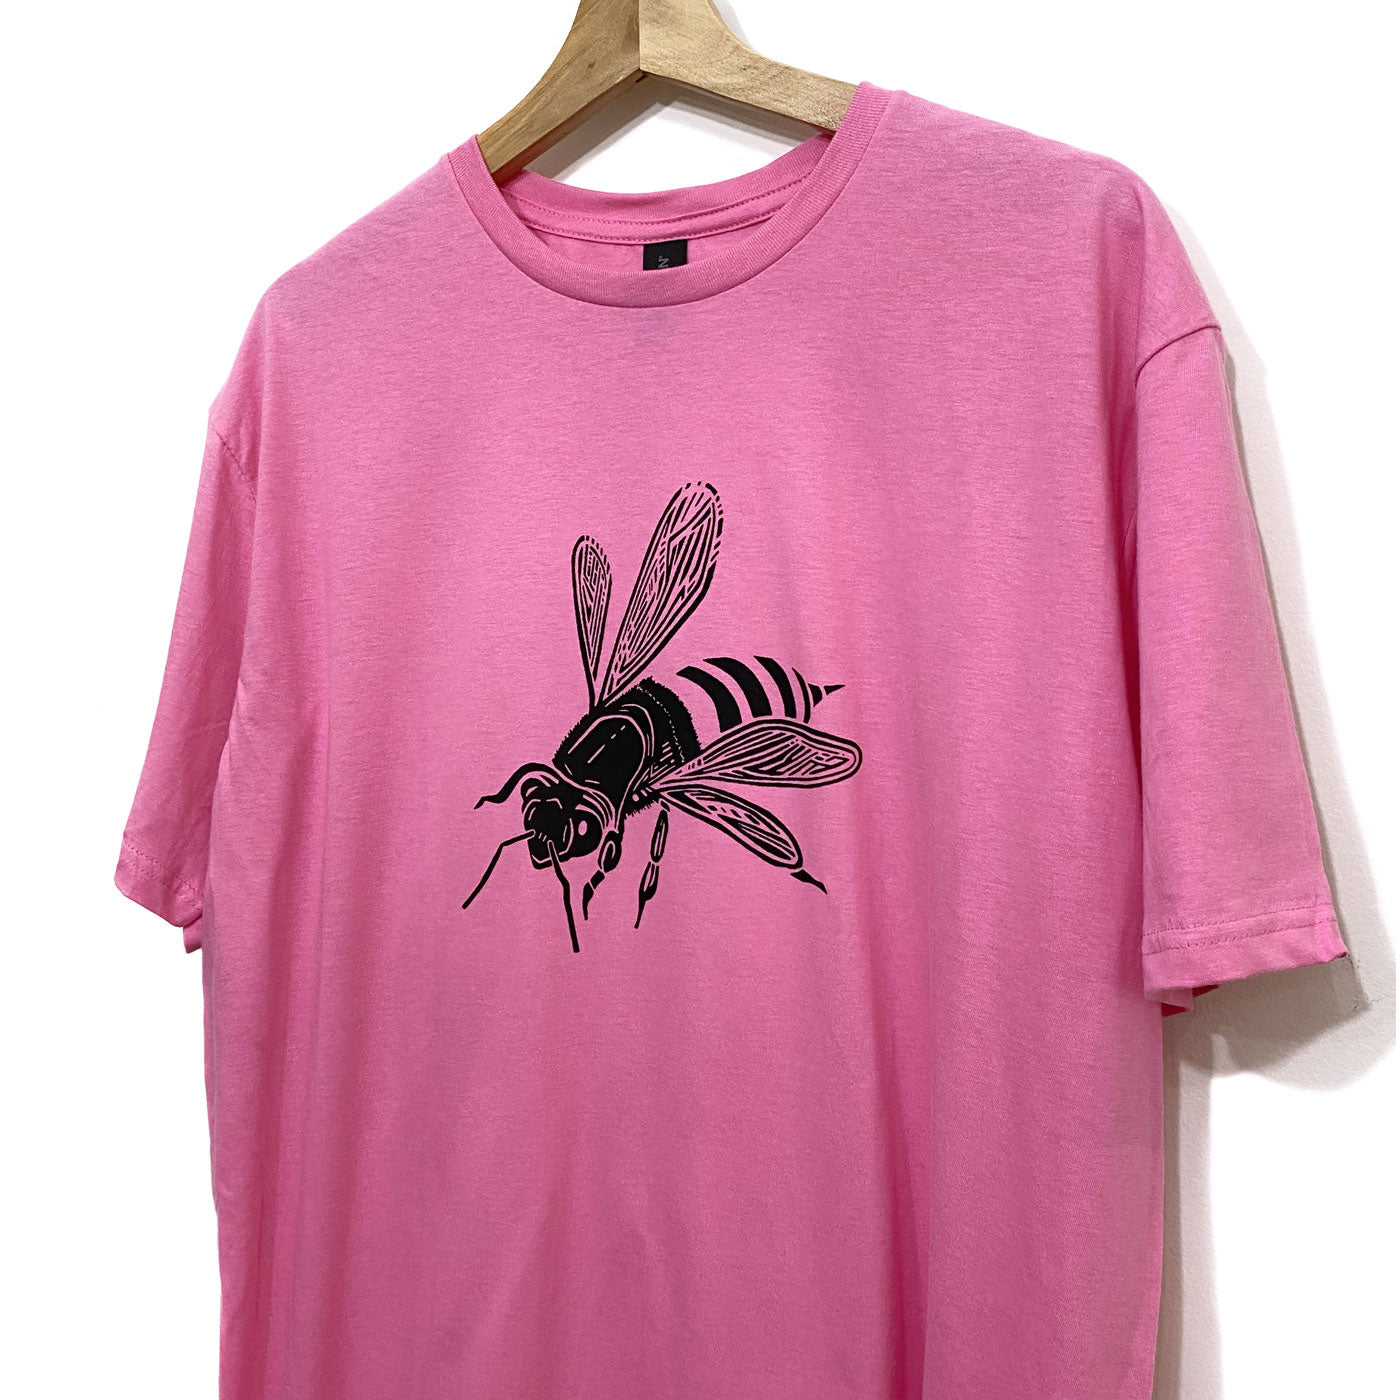 Black Bee on Pink T-Shirt